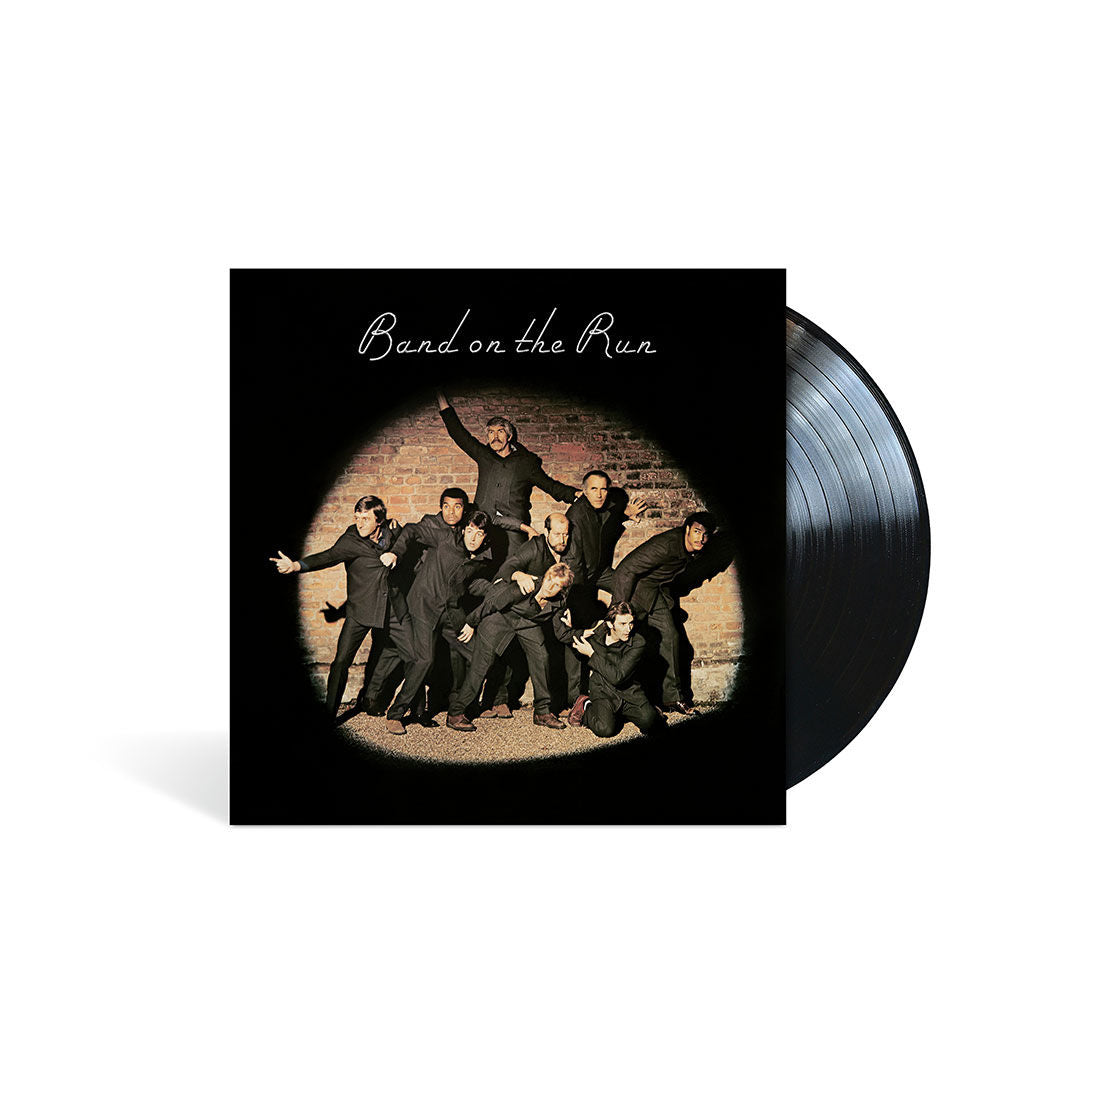 Paul McCartney, Wings - Band on the Run: Vinyl LP